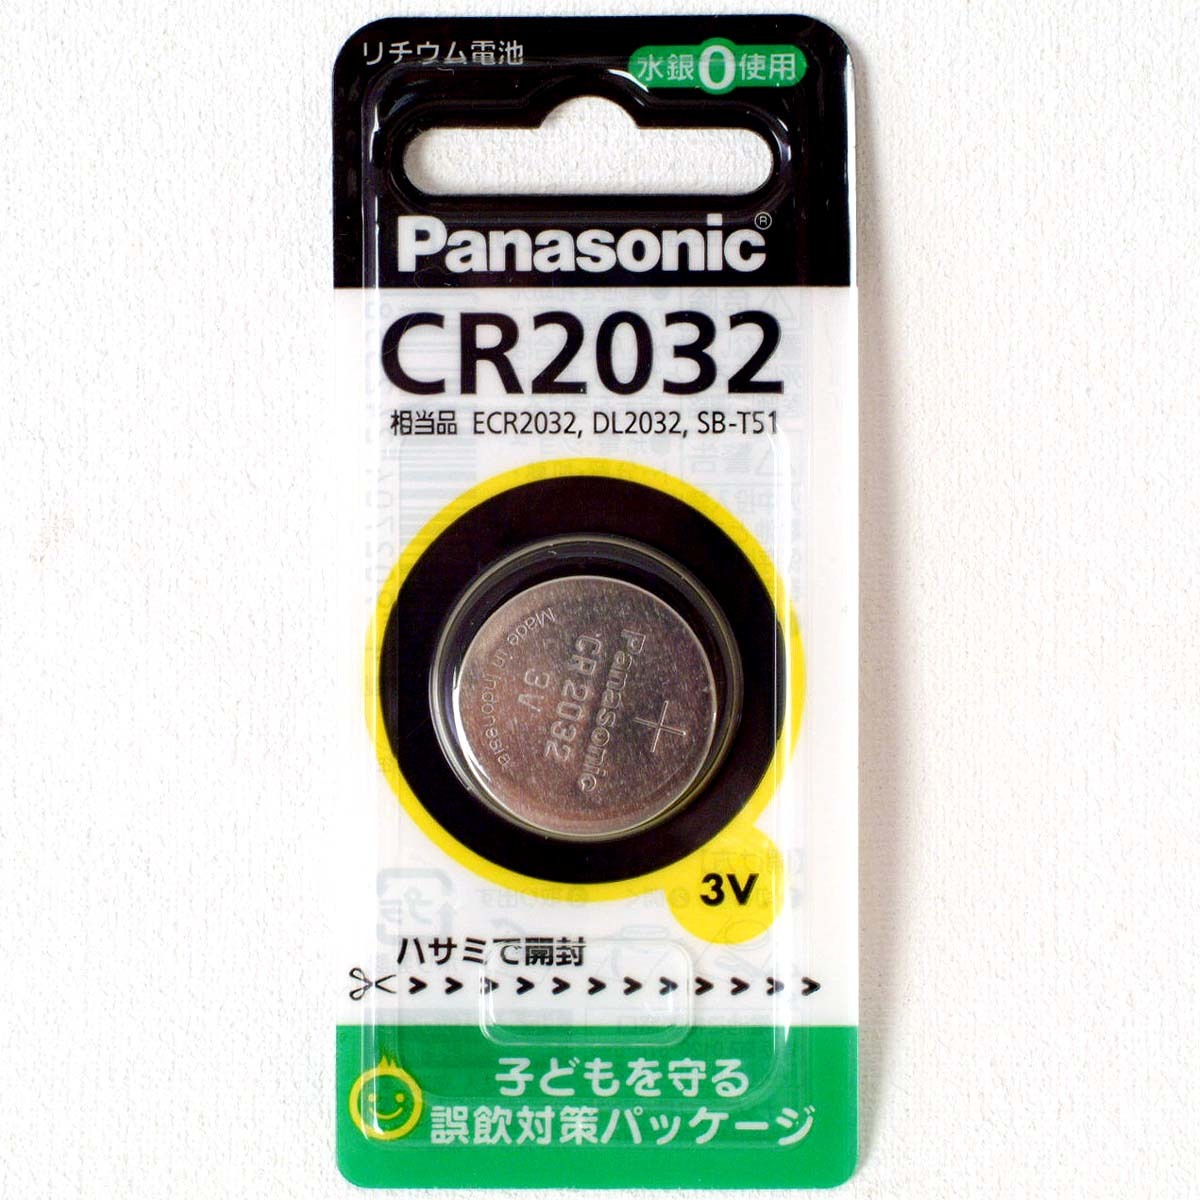 CR2032  монета  батарея 【1 штука  】3V  Panasonic  Panasonic CR2032P  литий  батарея 【  блиц-цена 】 кнопка  батарея  ECR2032 DL2032 SB-T51★4902704242358  новый товар 